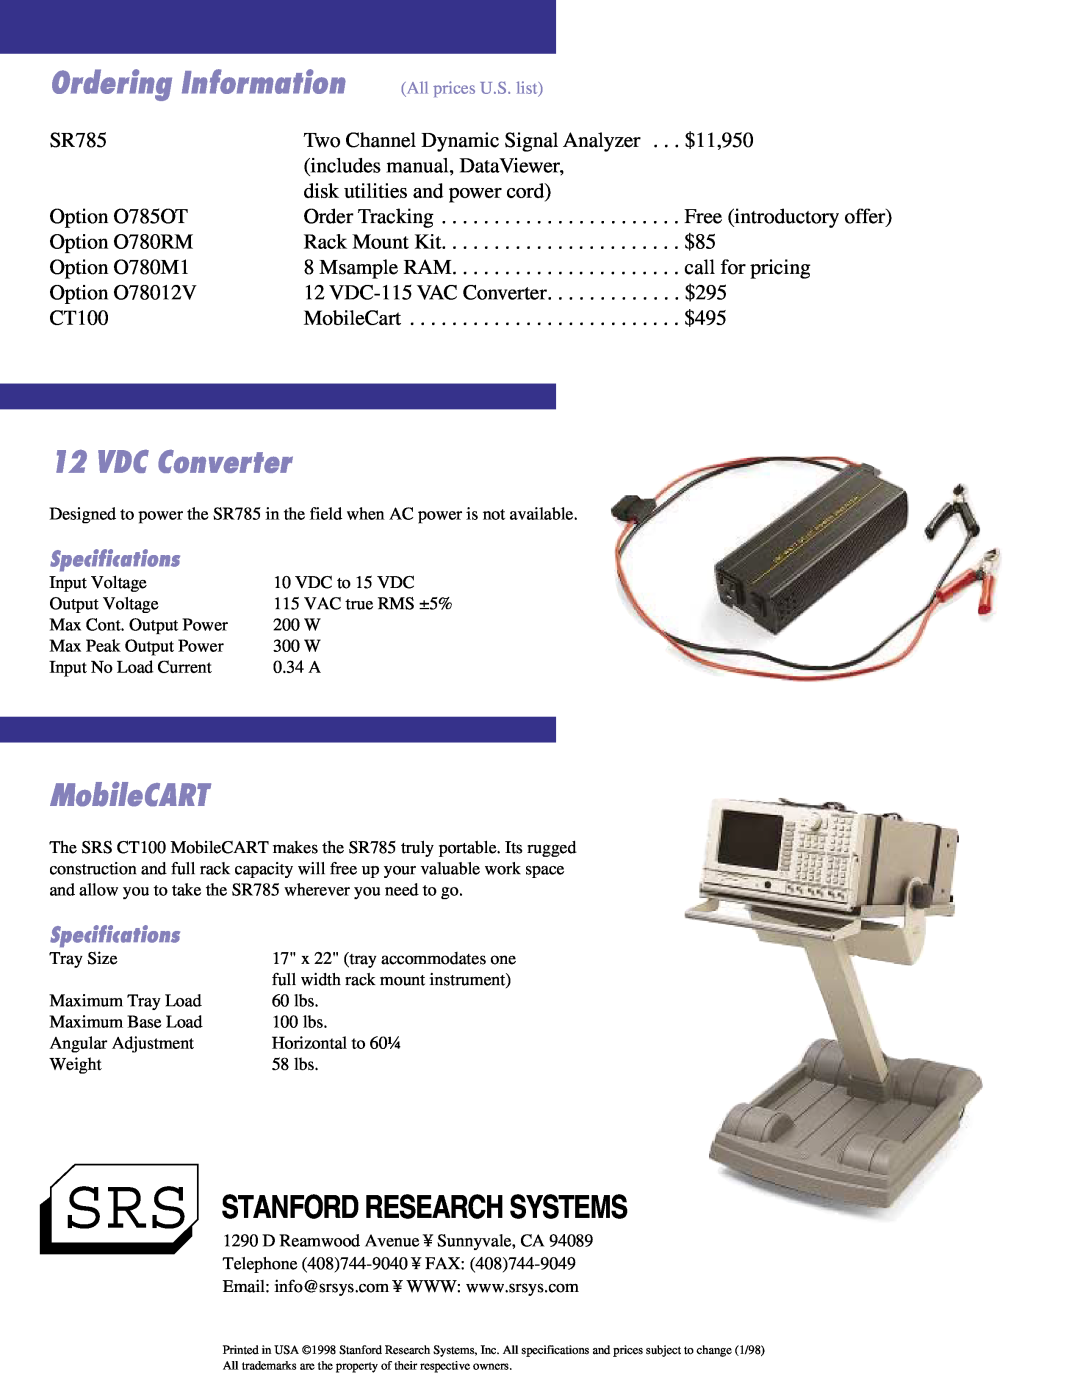 SRS Labs SR785 manual Ordering Information, VDC Converter, MobileCART, Srs Stanford Research Systems 